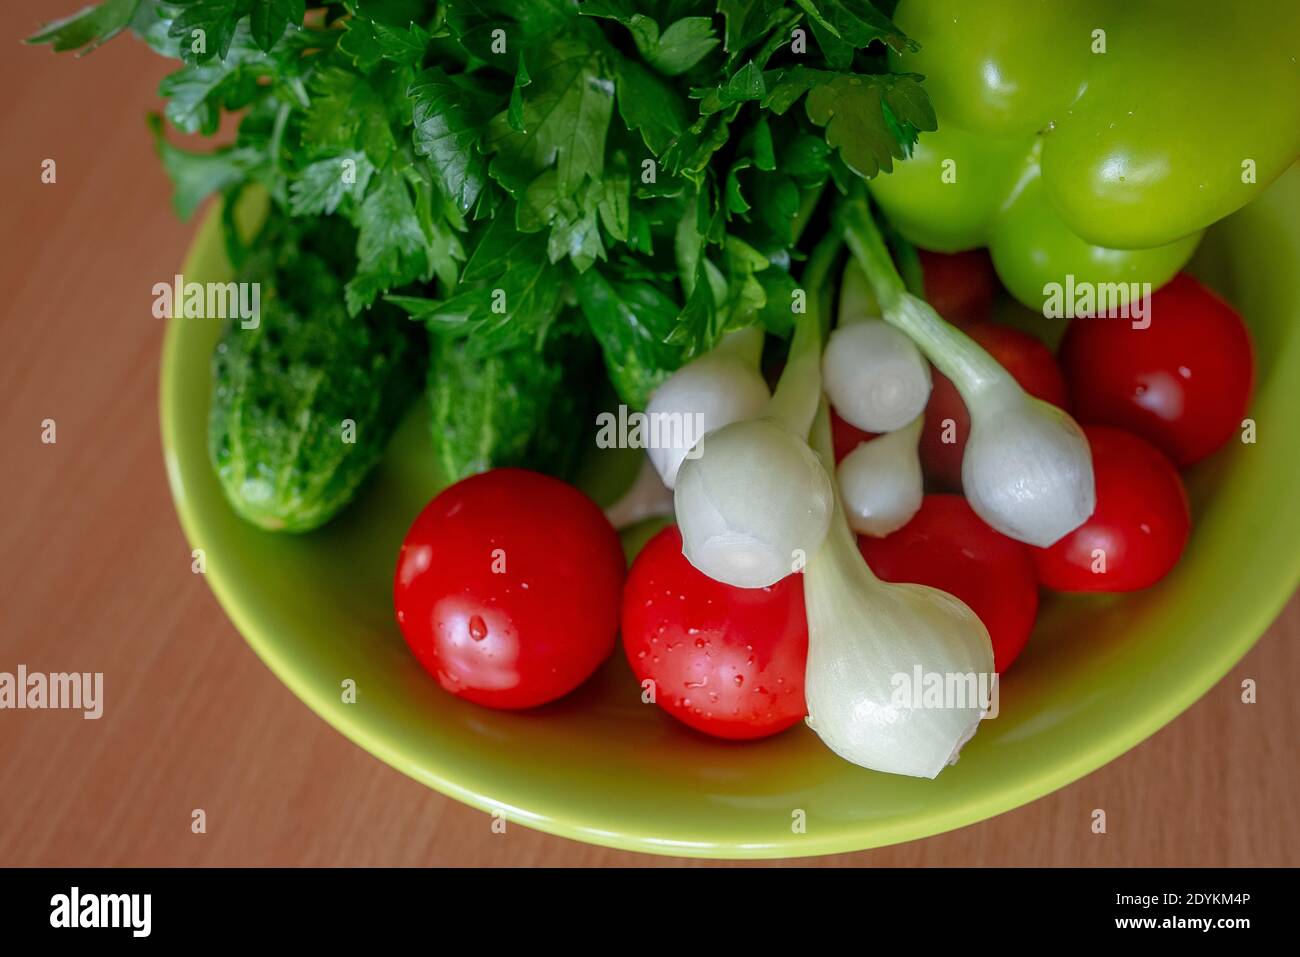 Ingredienti per insalata freschi e lavati - varietà di verdure sane per un pasto crudo Foto Stock